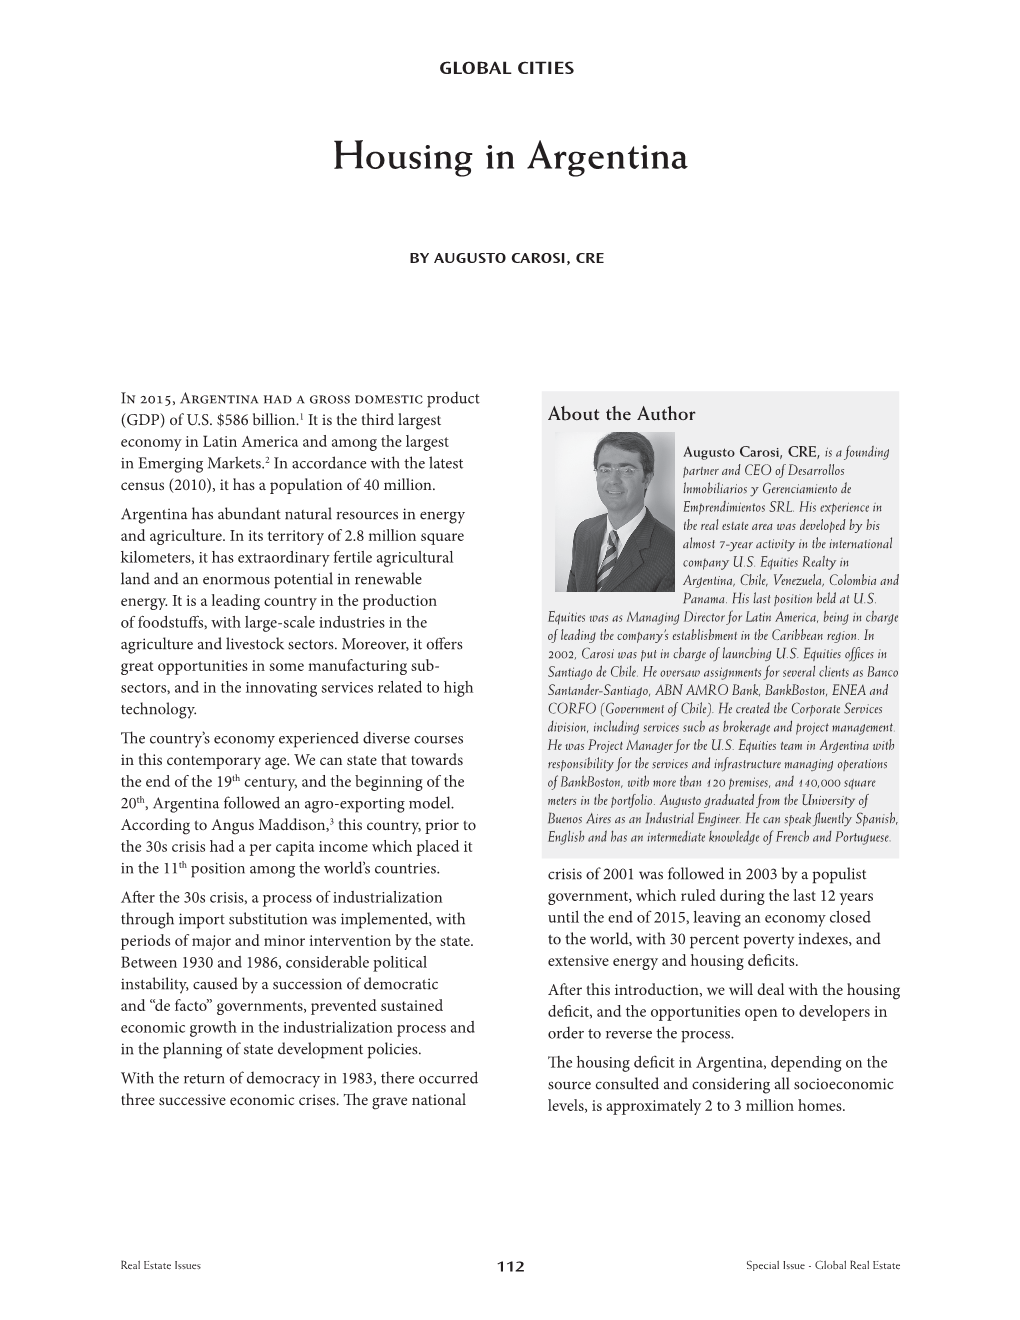 Housing in Argentina